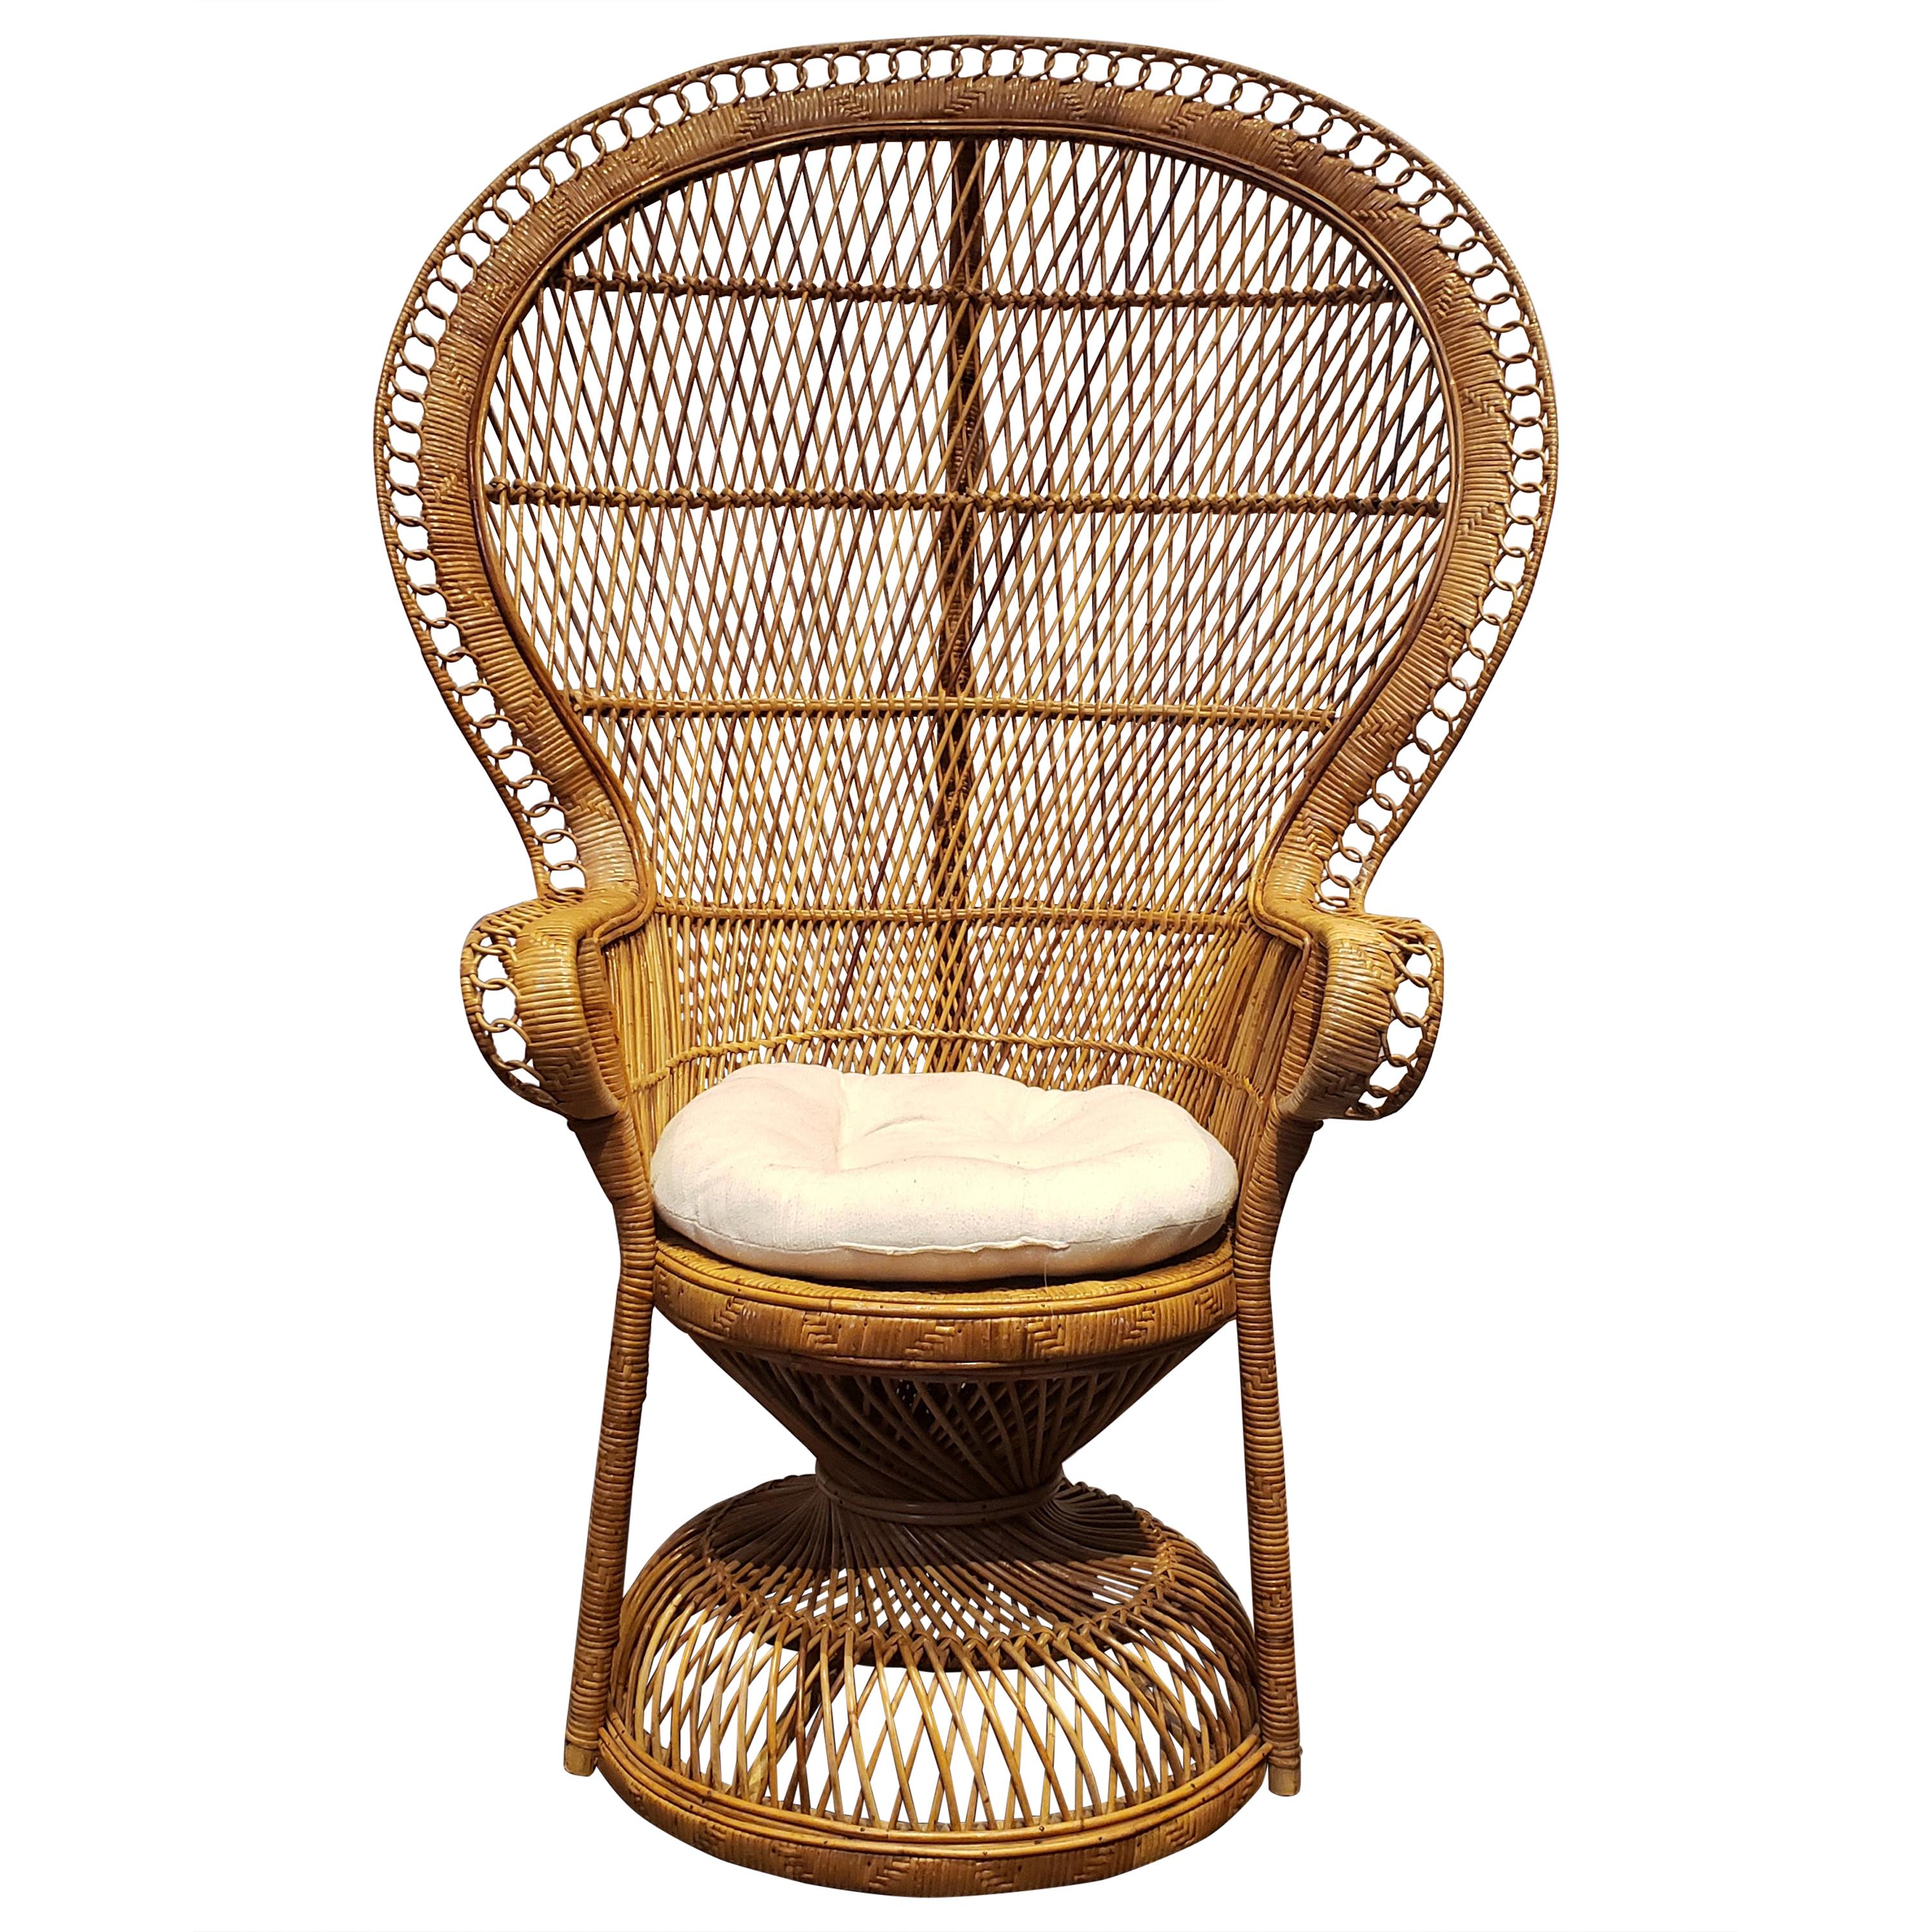 1970s Wicker Rattan Peacock Throne Chair